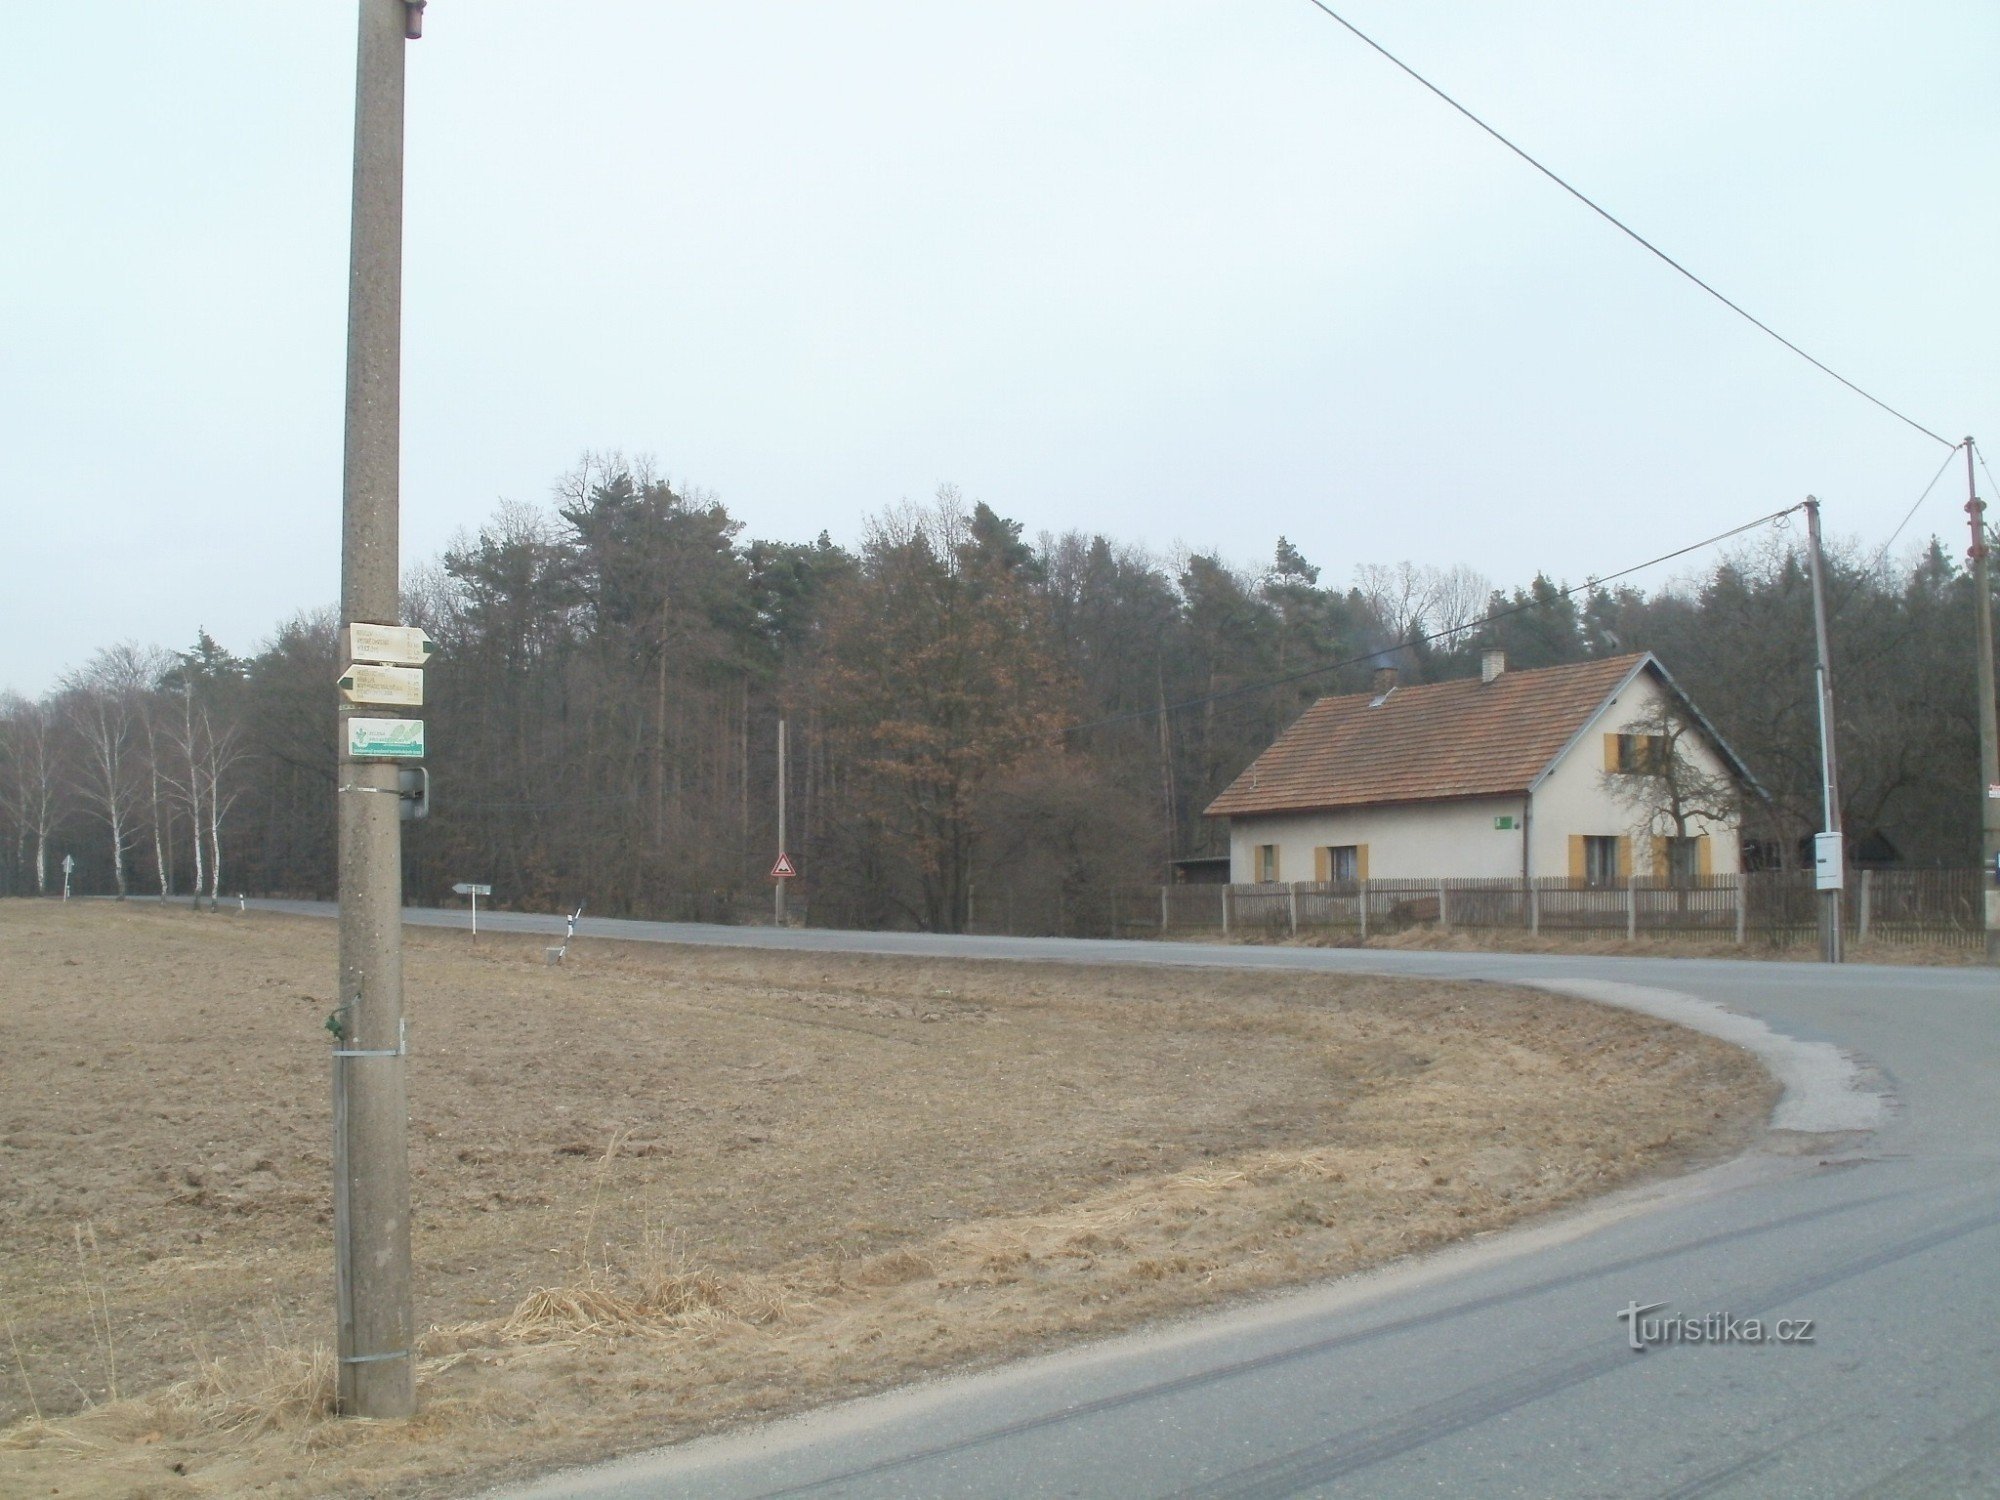 Toeristisch kruispunt van wildreservaat Hoděšovka